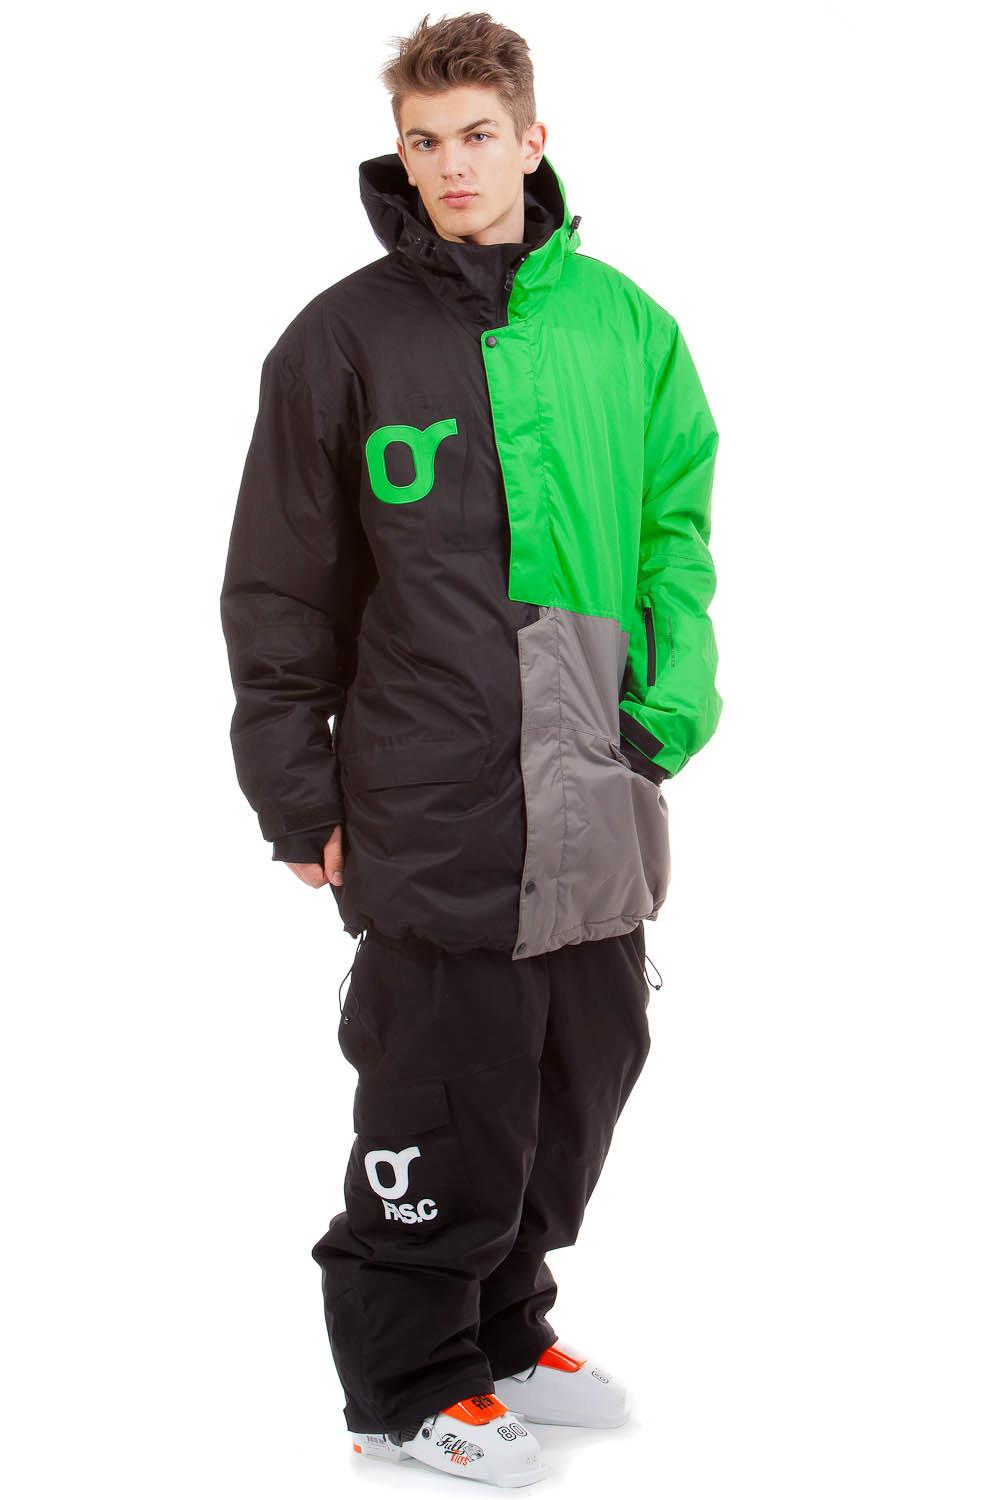 Зимняя непромокаемая куртка Fasc Falco Green (XL)